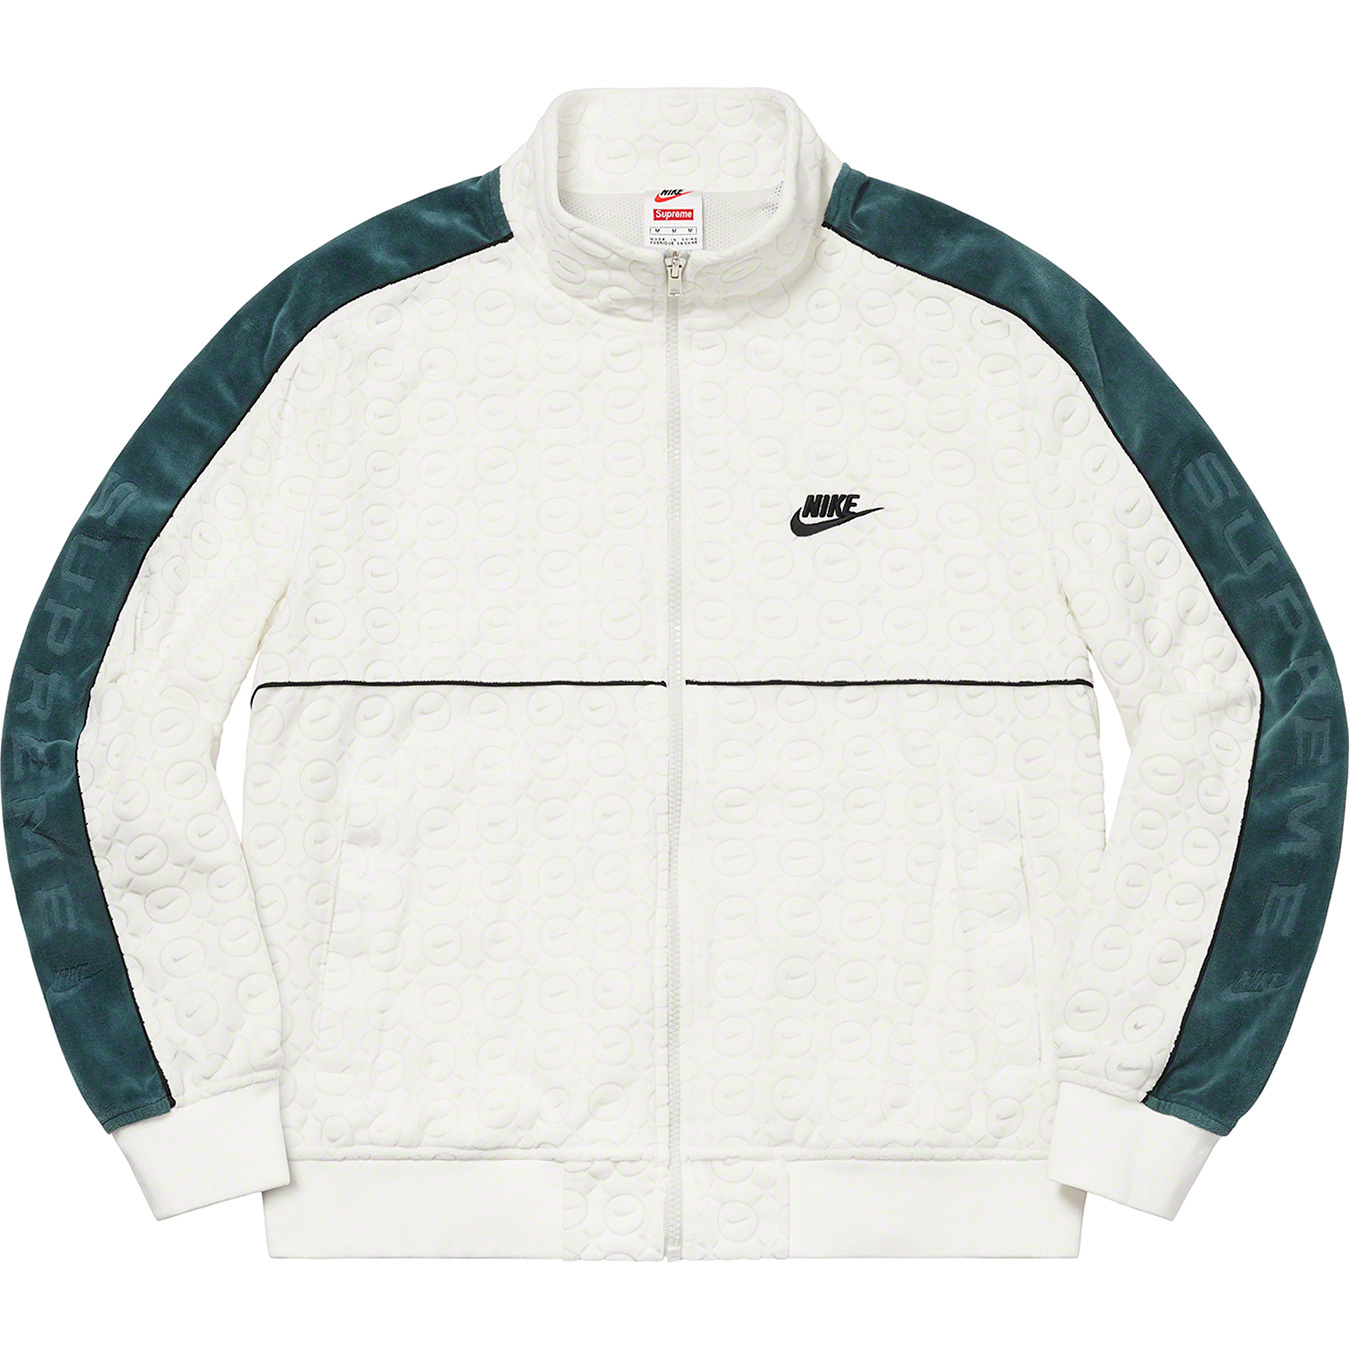 Supreme / Nike® Velour Track Jacket